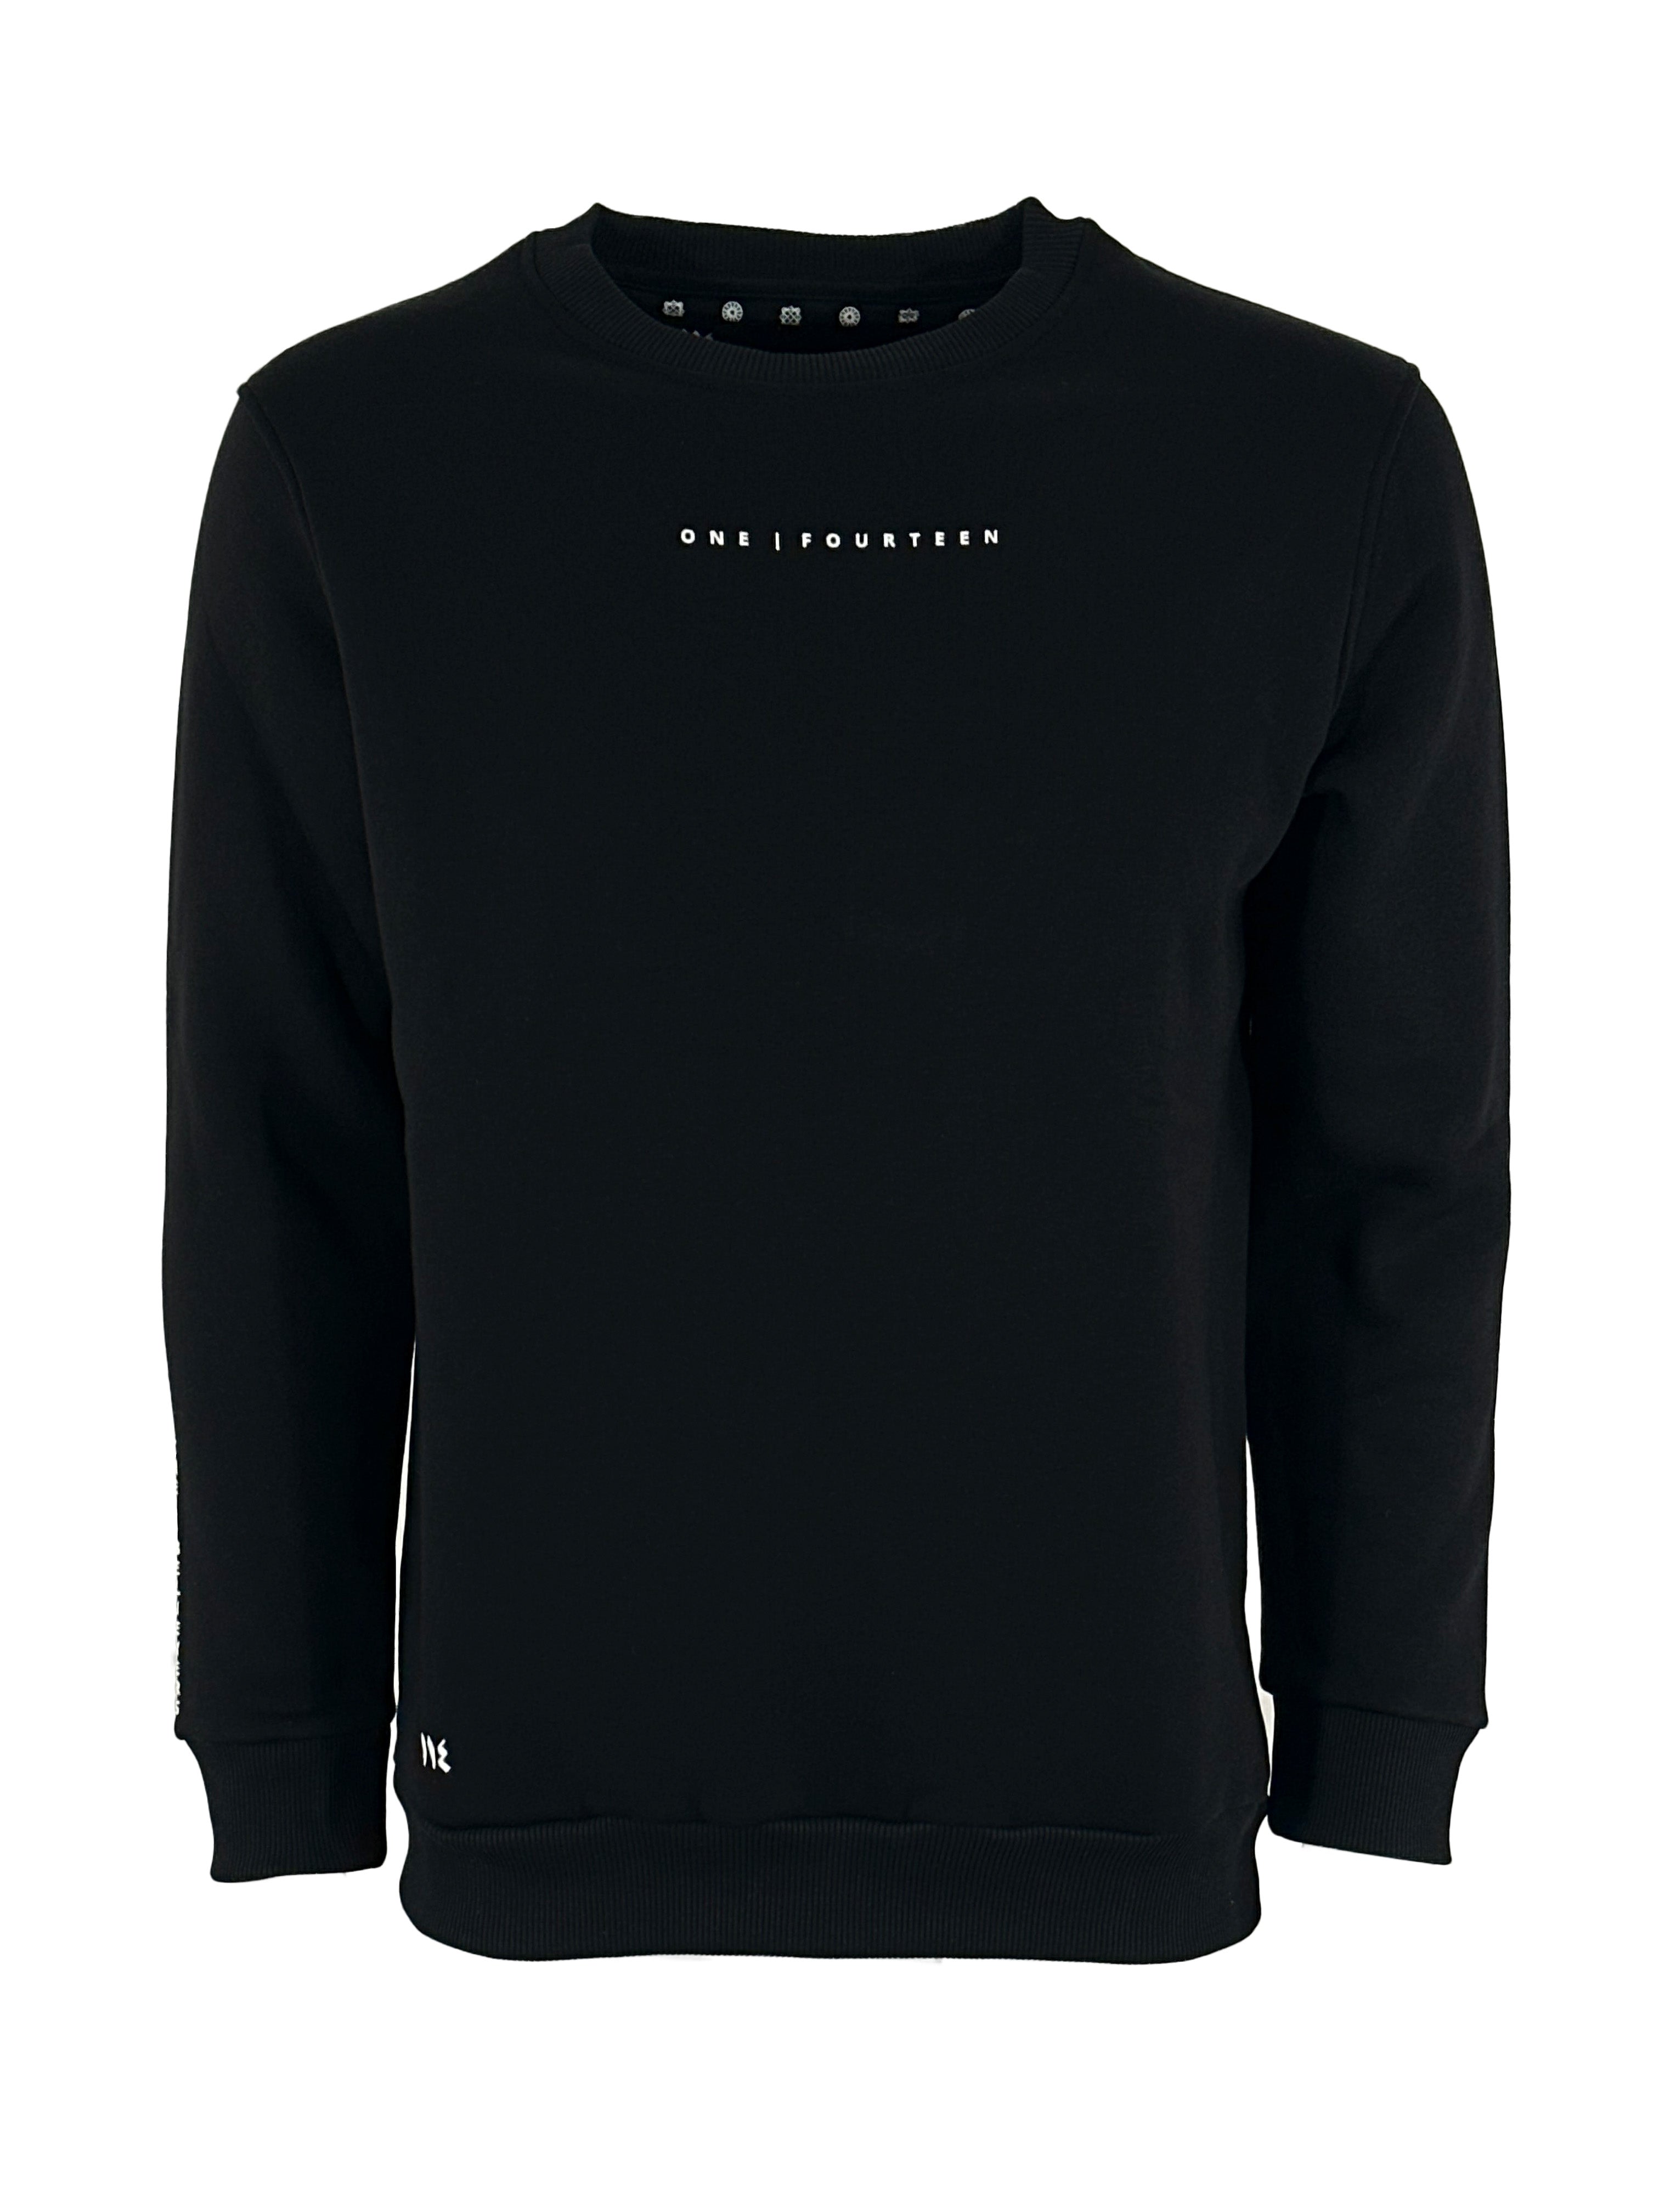 Brunei black premium sweatshirt